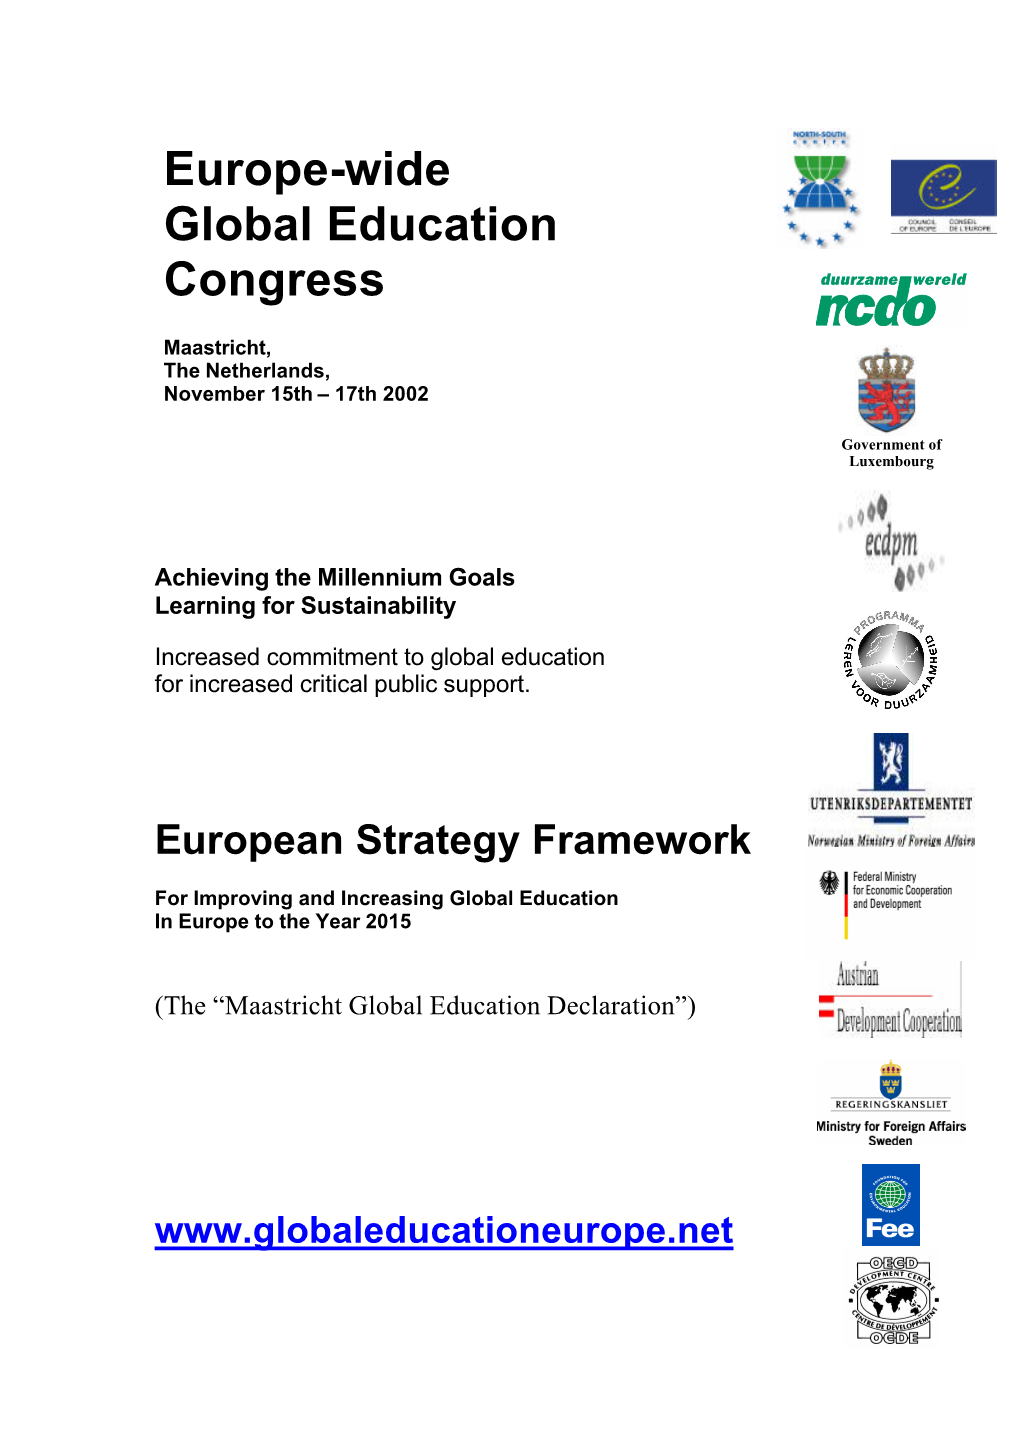 The Maastricht Global Education Declaration